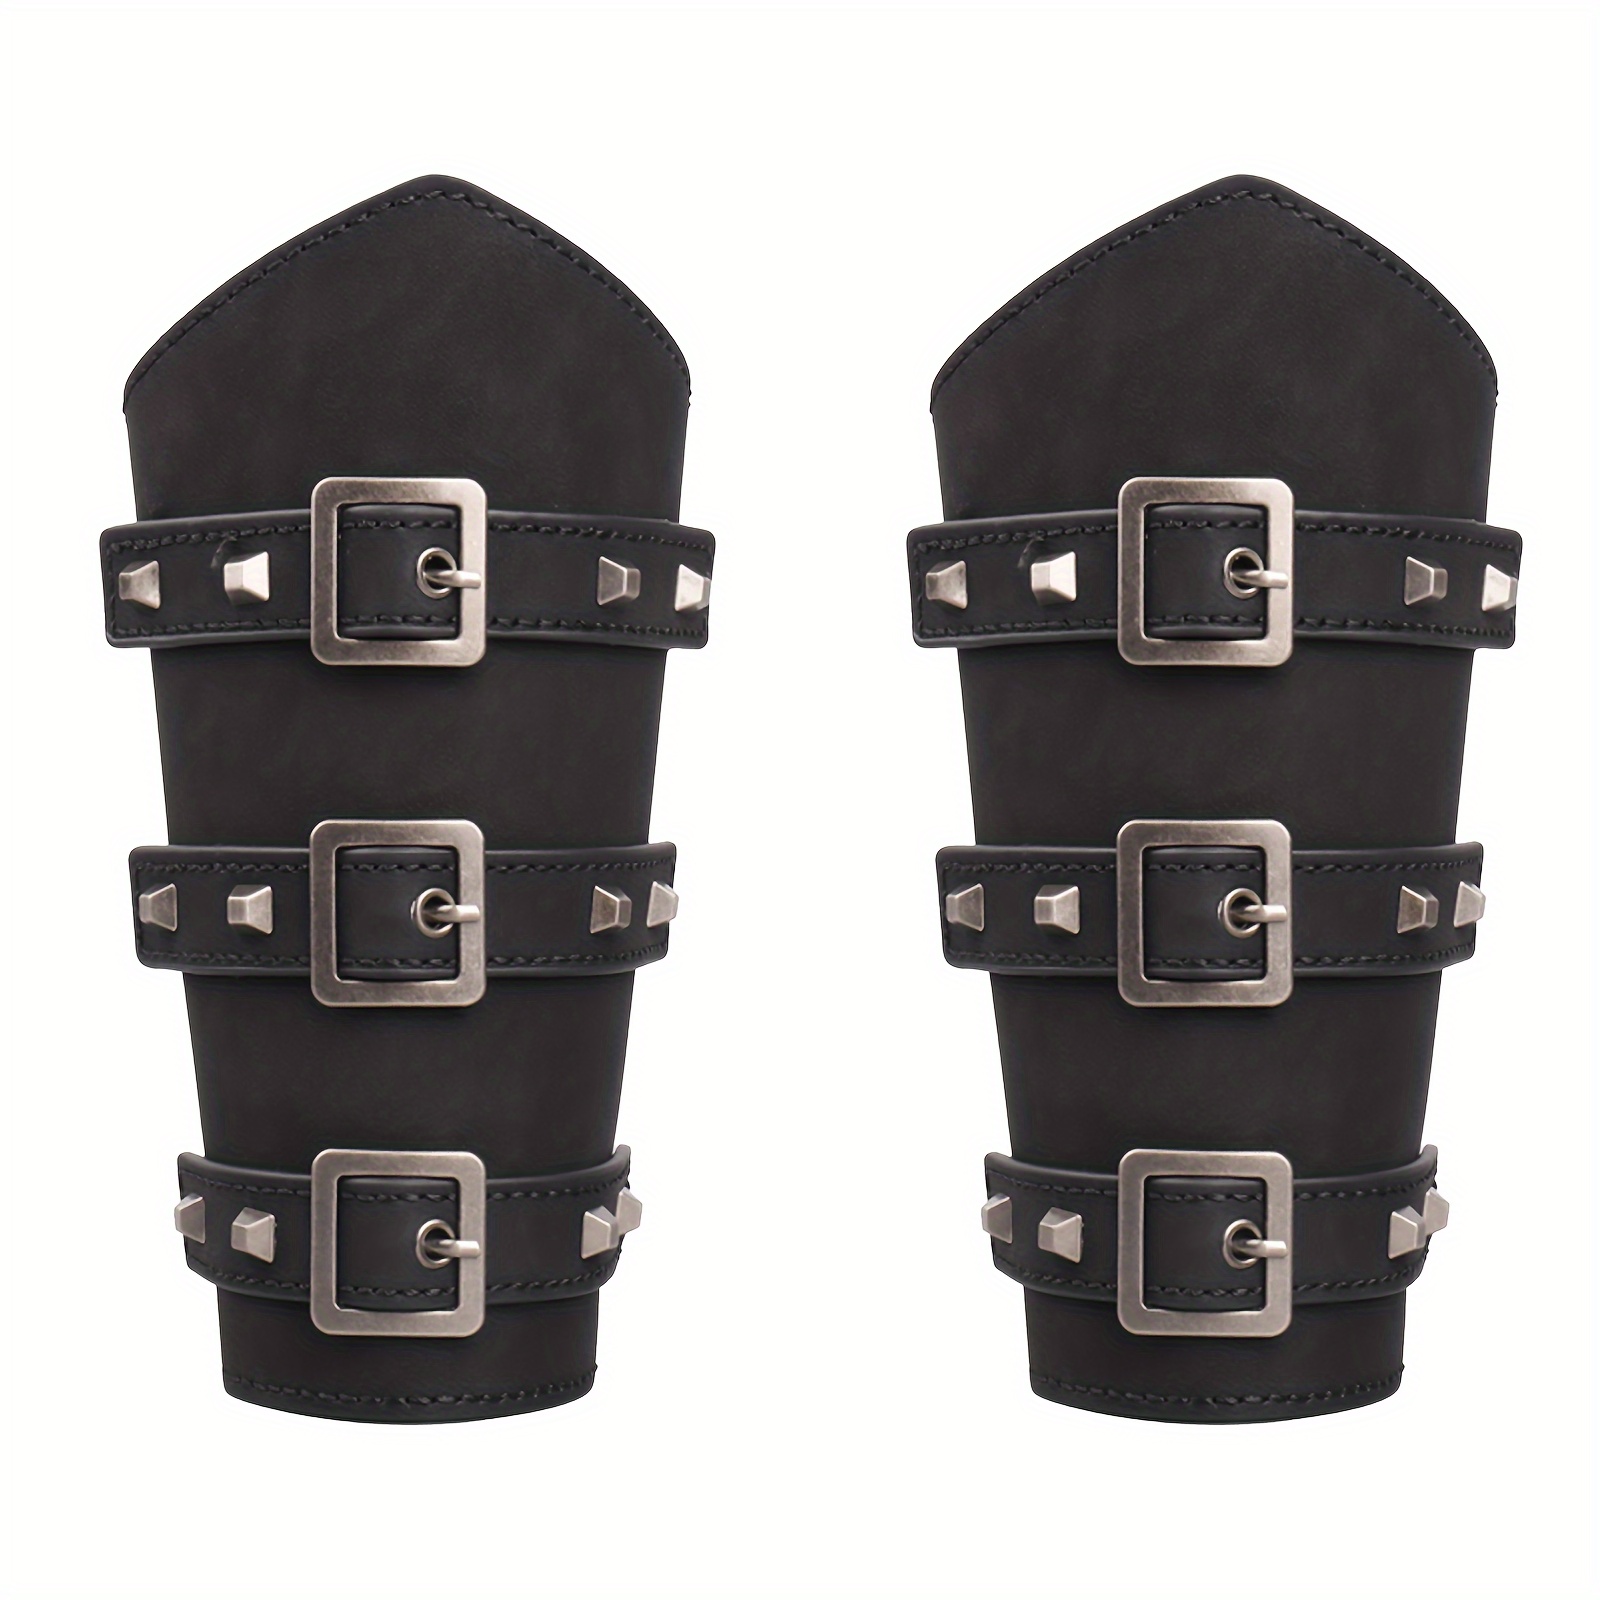 2 Pieces Punk Arm Guards Vambrace Buckled Gothic Medieval Bracers Arm 